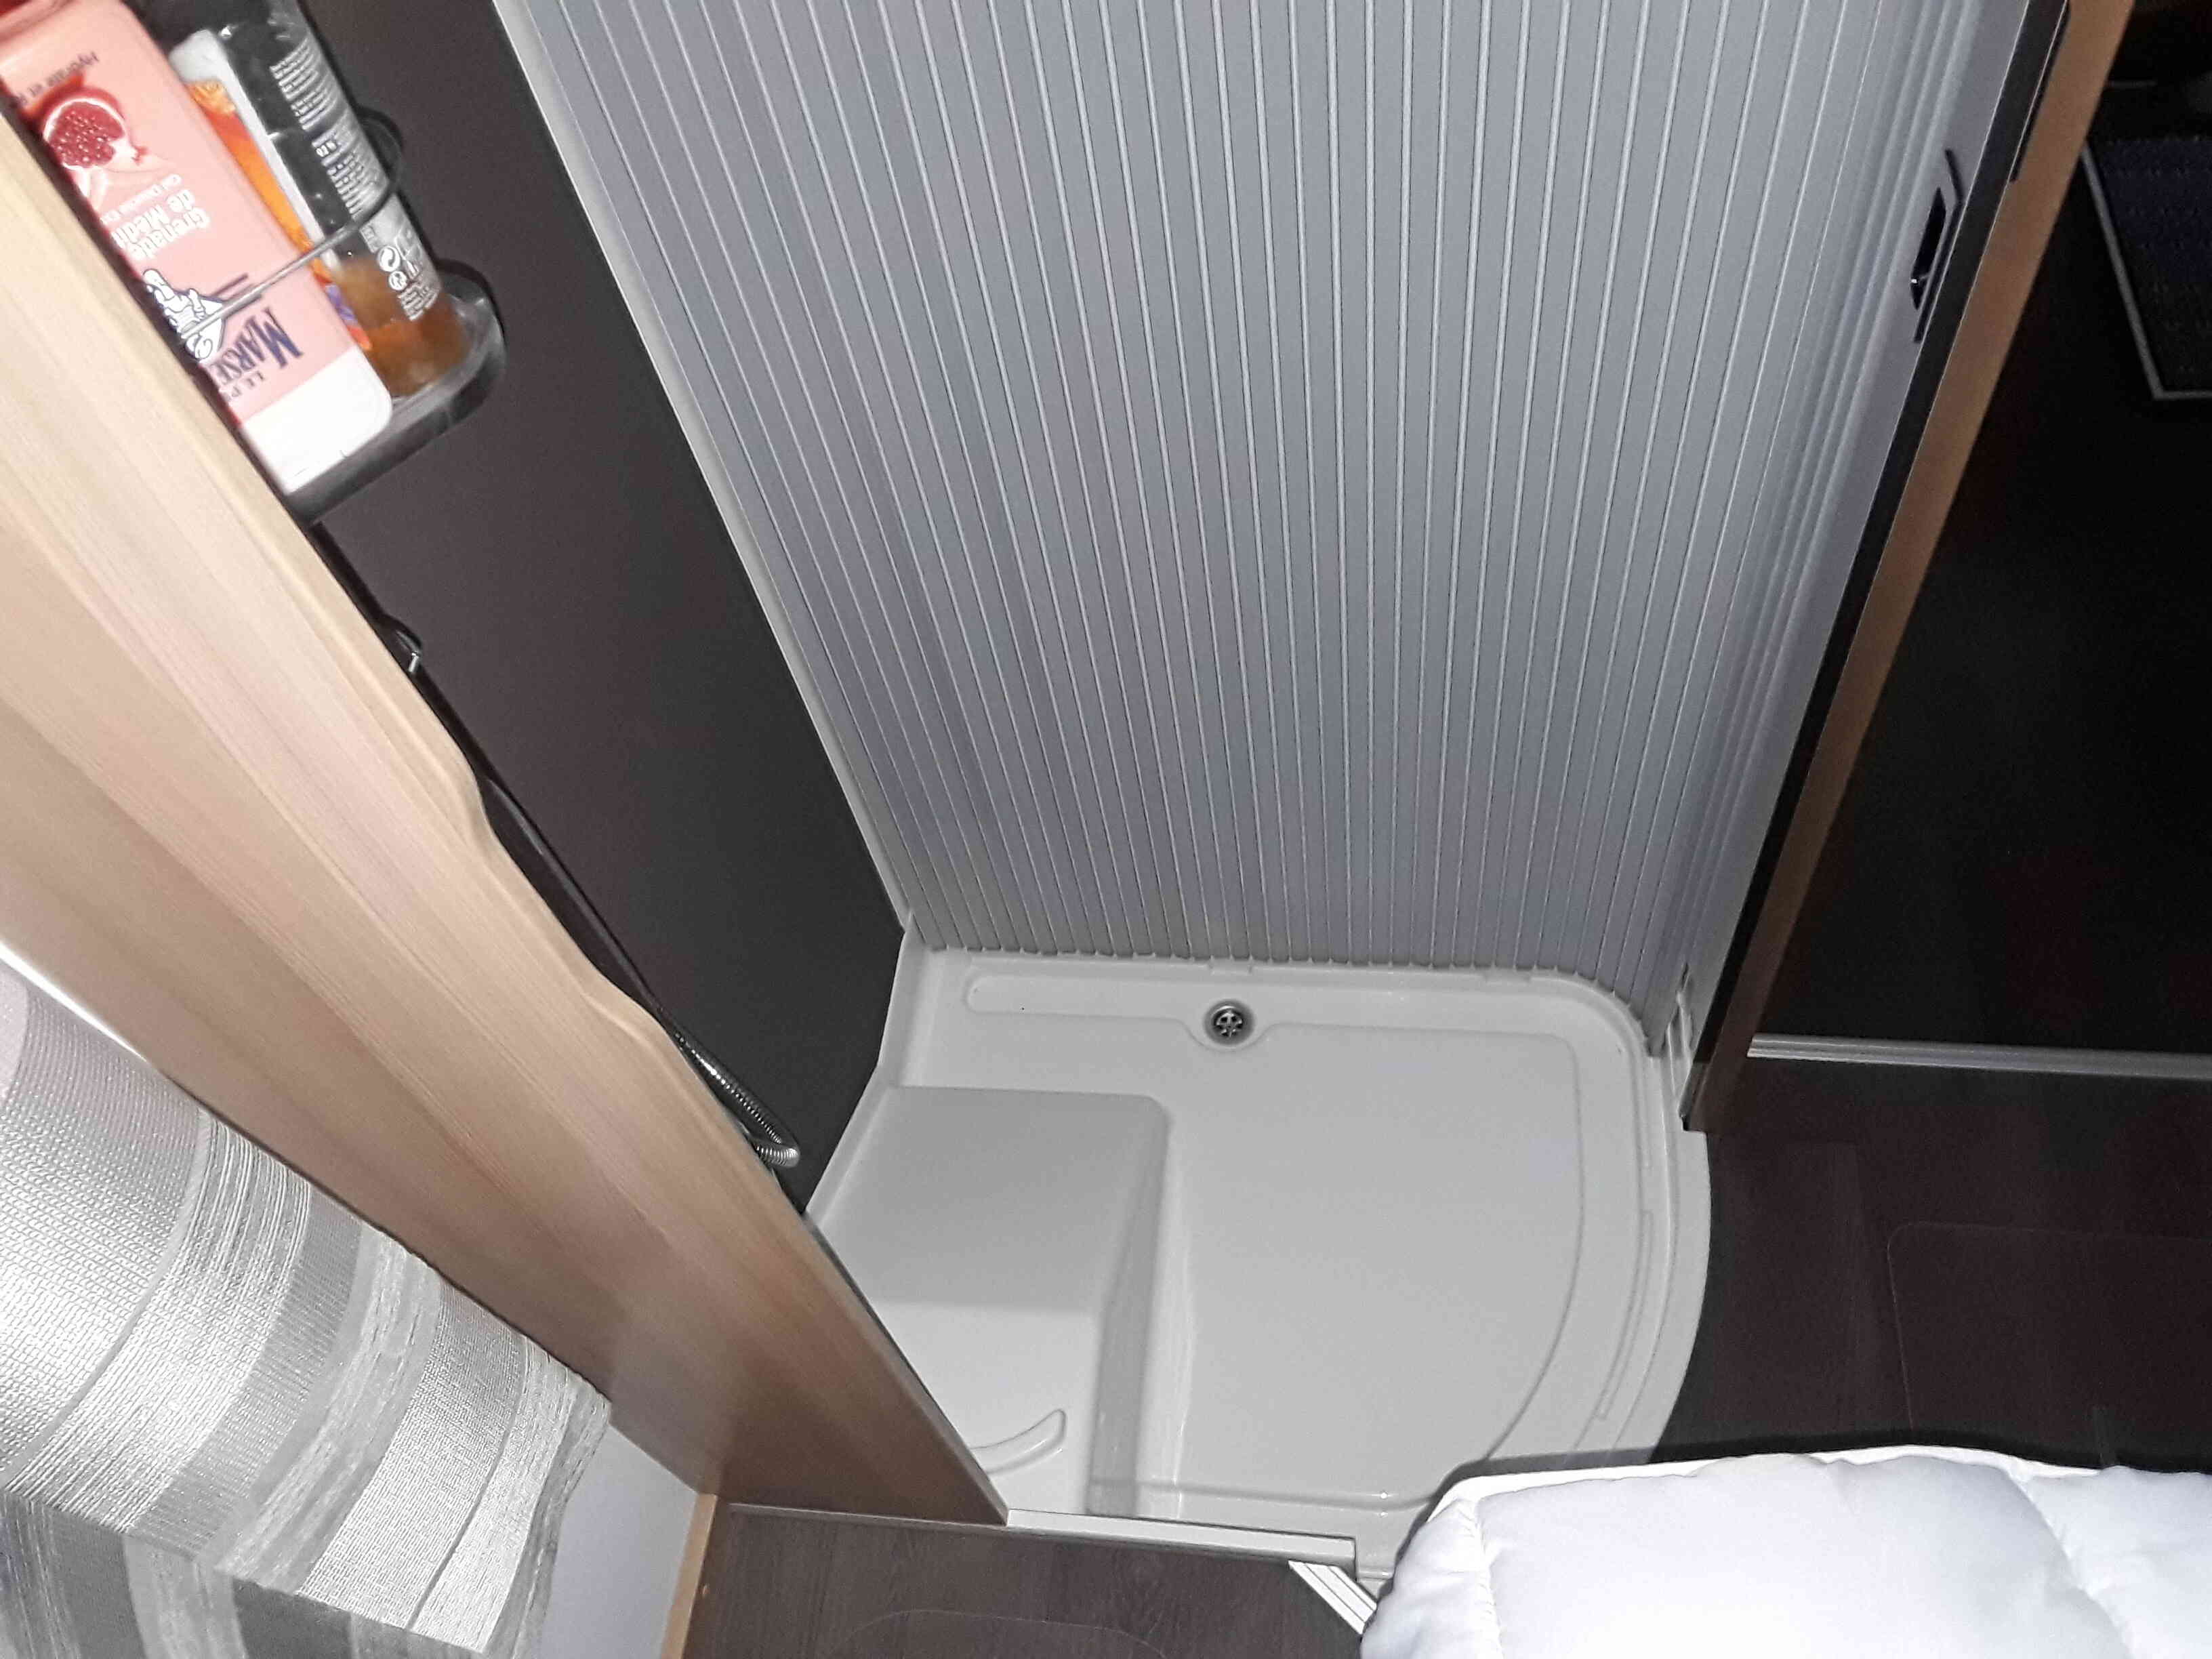 camping-car ADRIA MATRIX AXESS 600 SC   intérieur / salle de bain  et wc